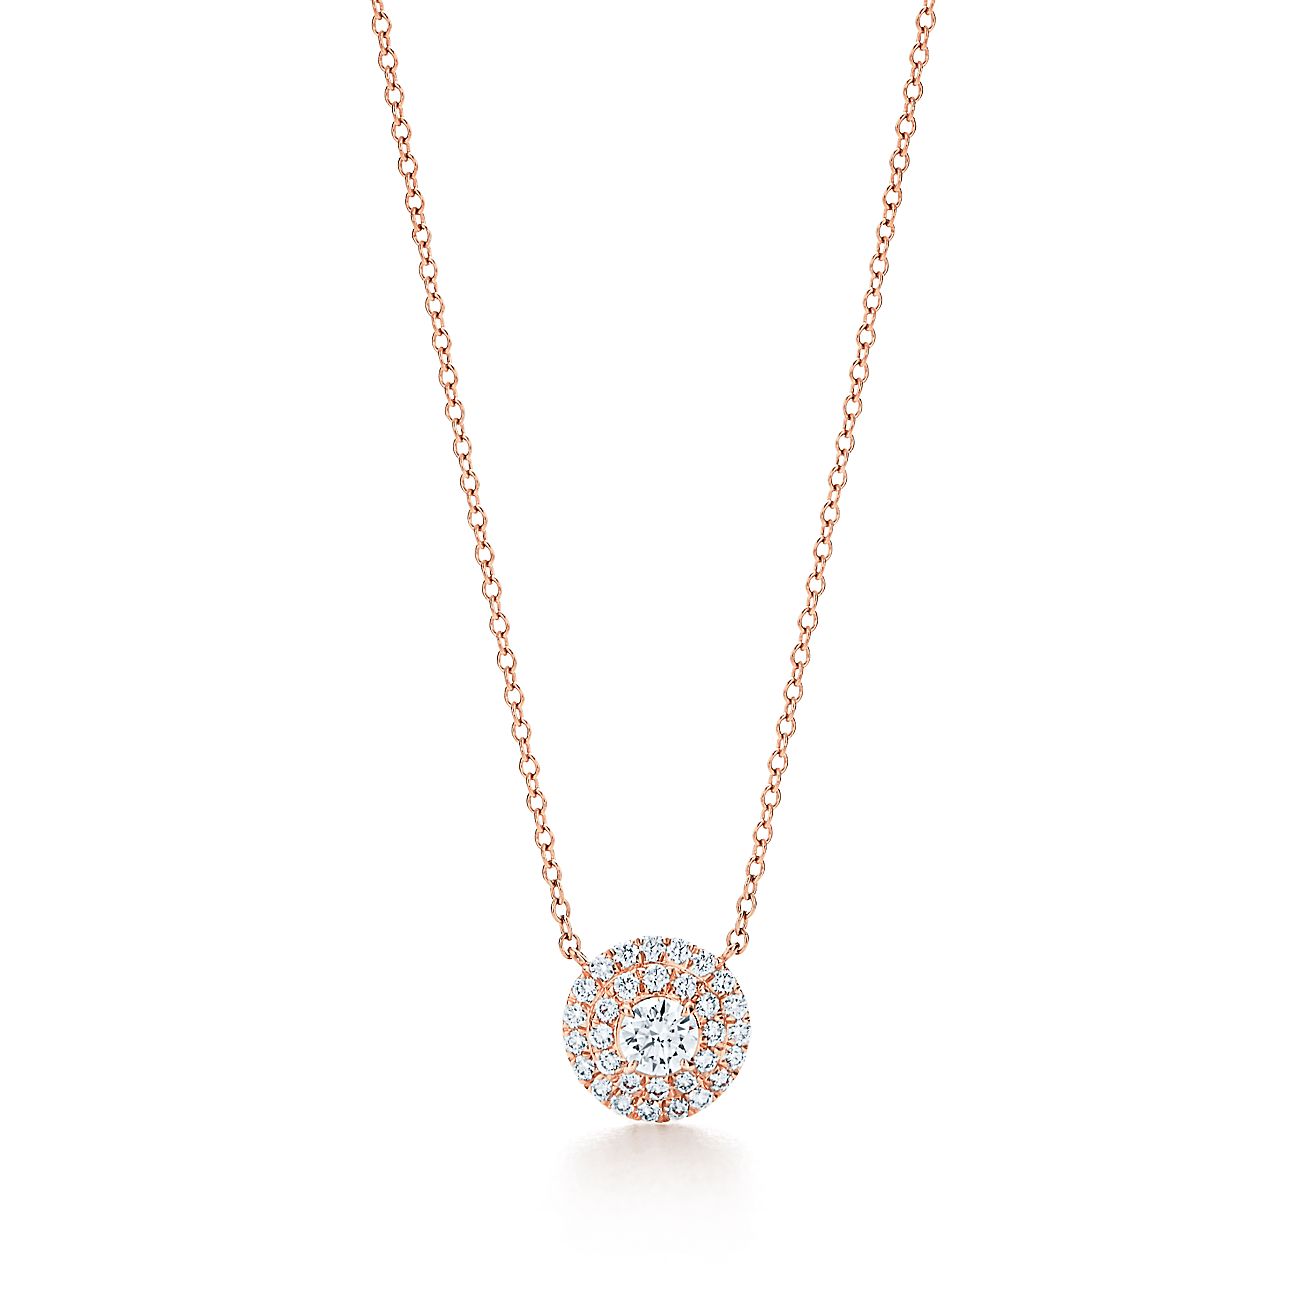 Tiffany Soleste Pendant in 18K Rose Gold with Diamonds